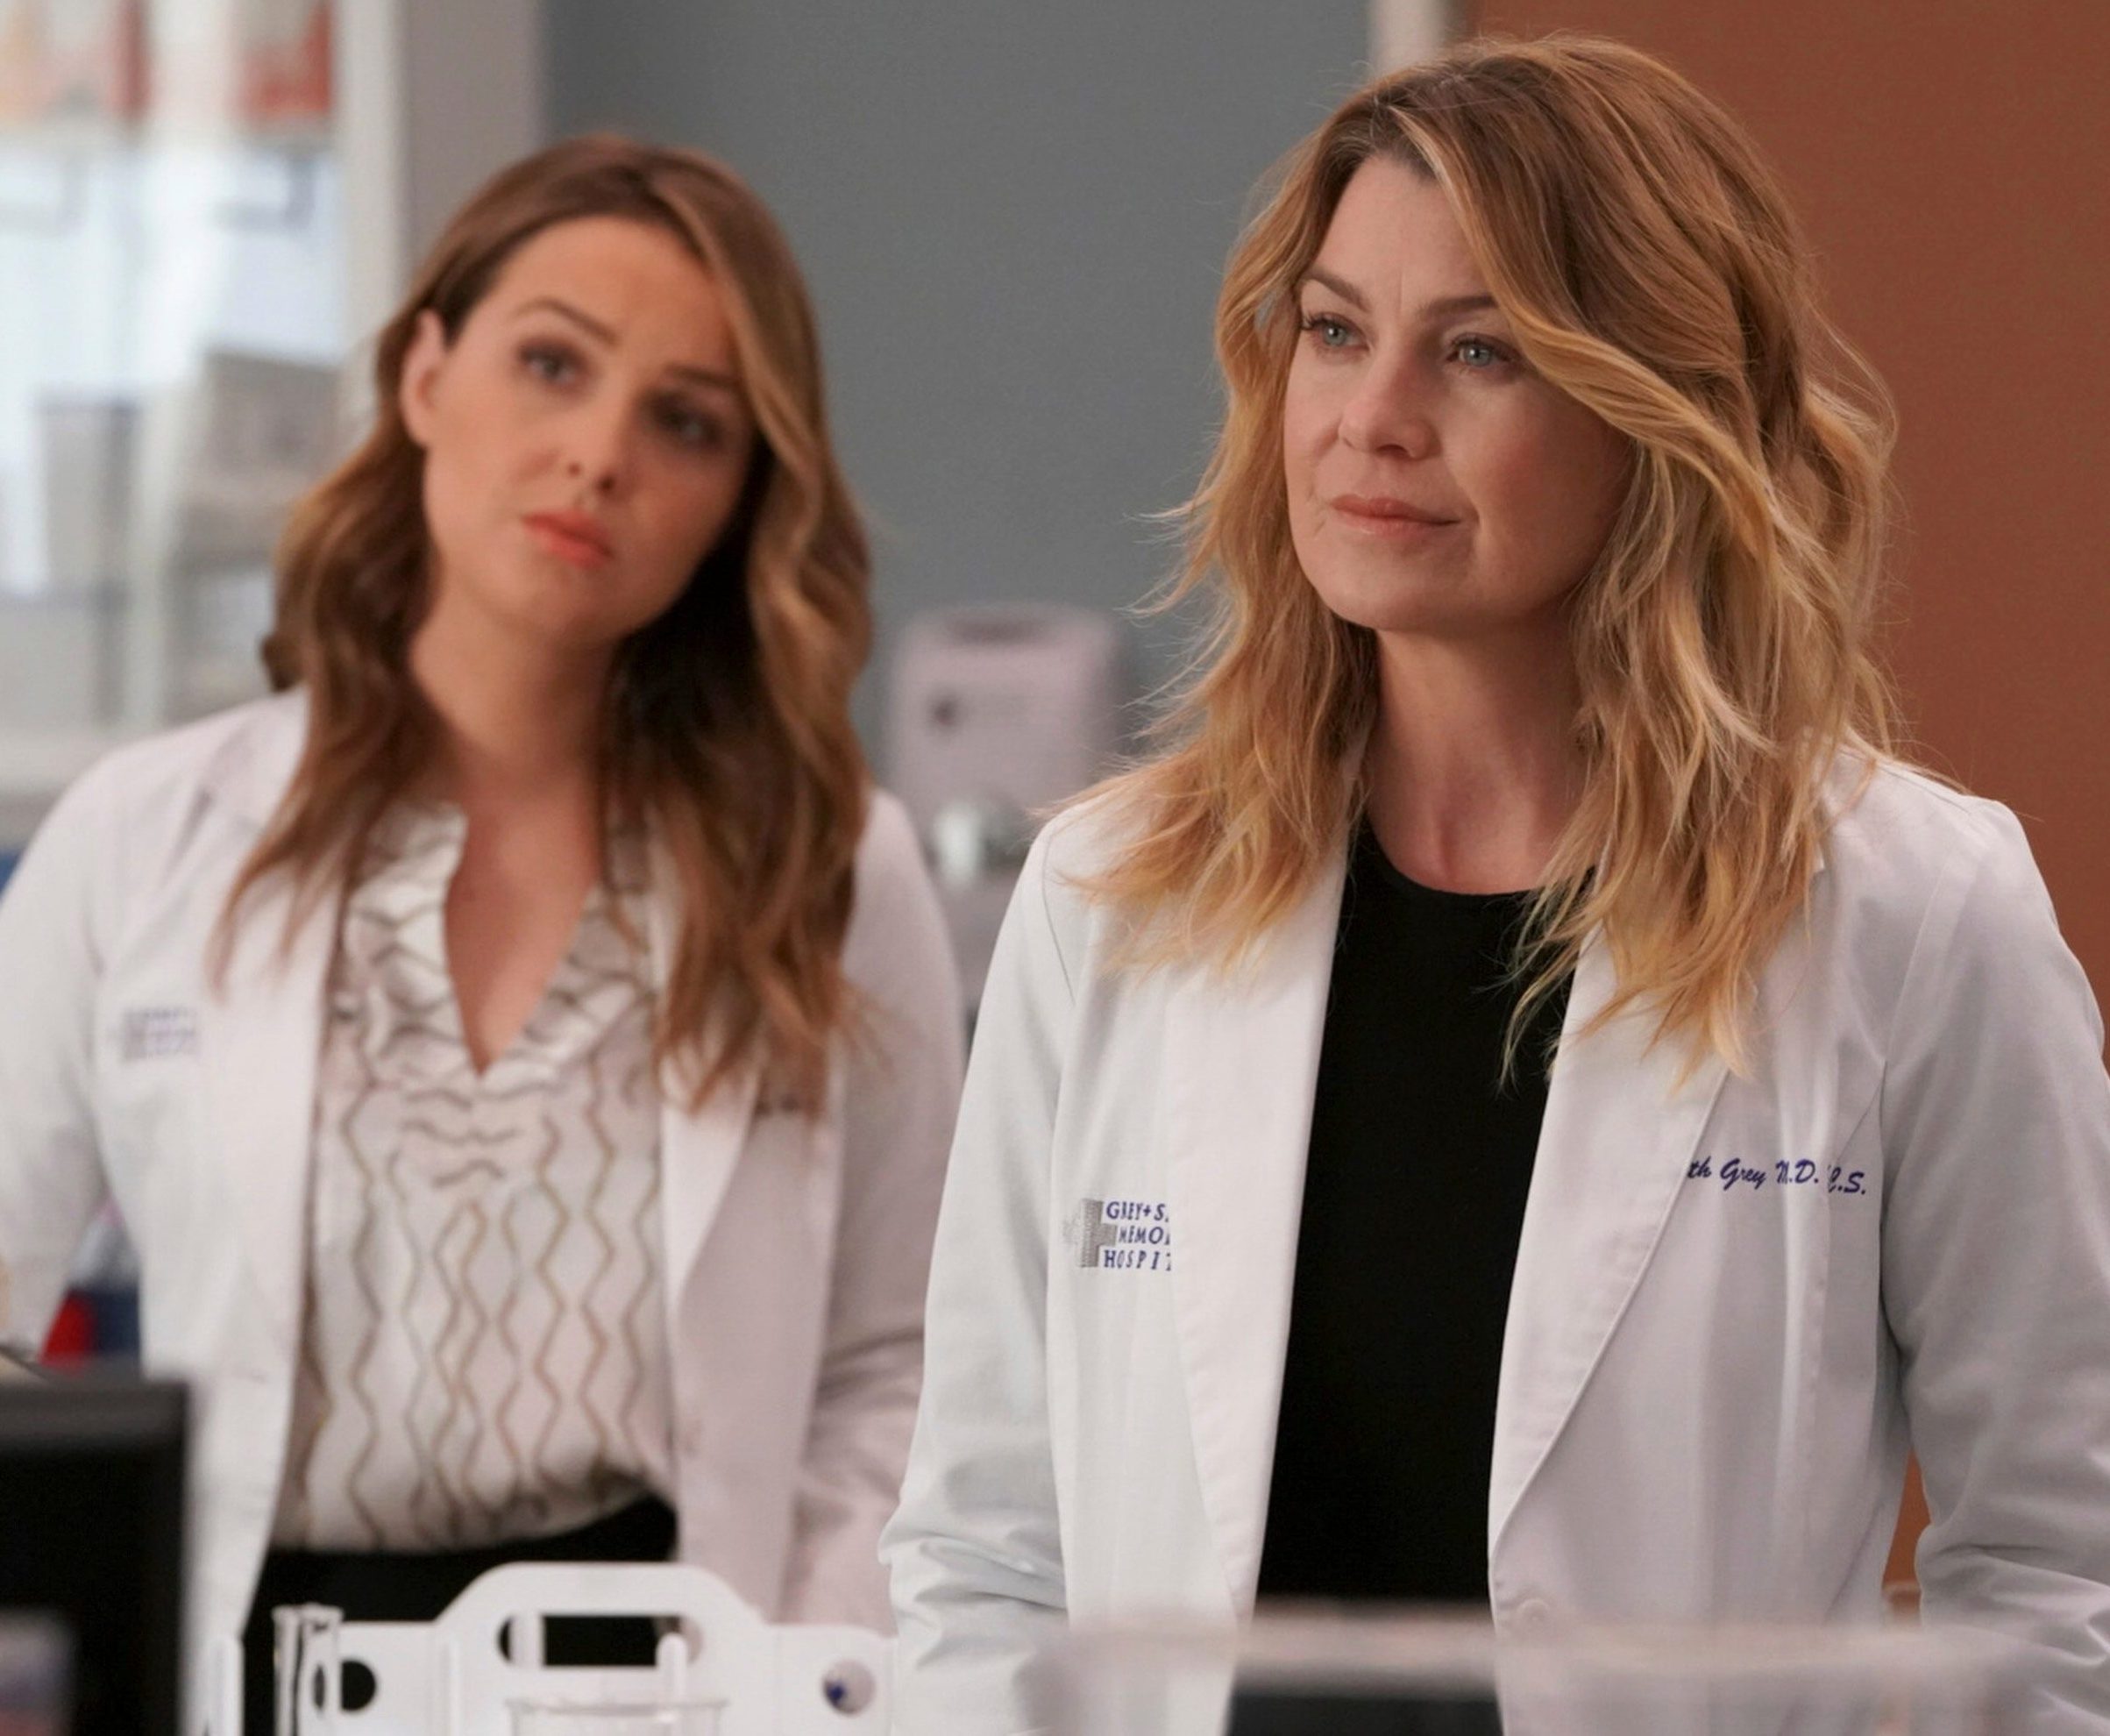 'Grey's Anatomy' writers to start work on next season soon: showrunner